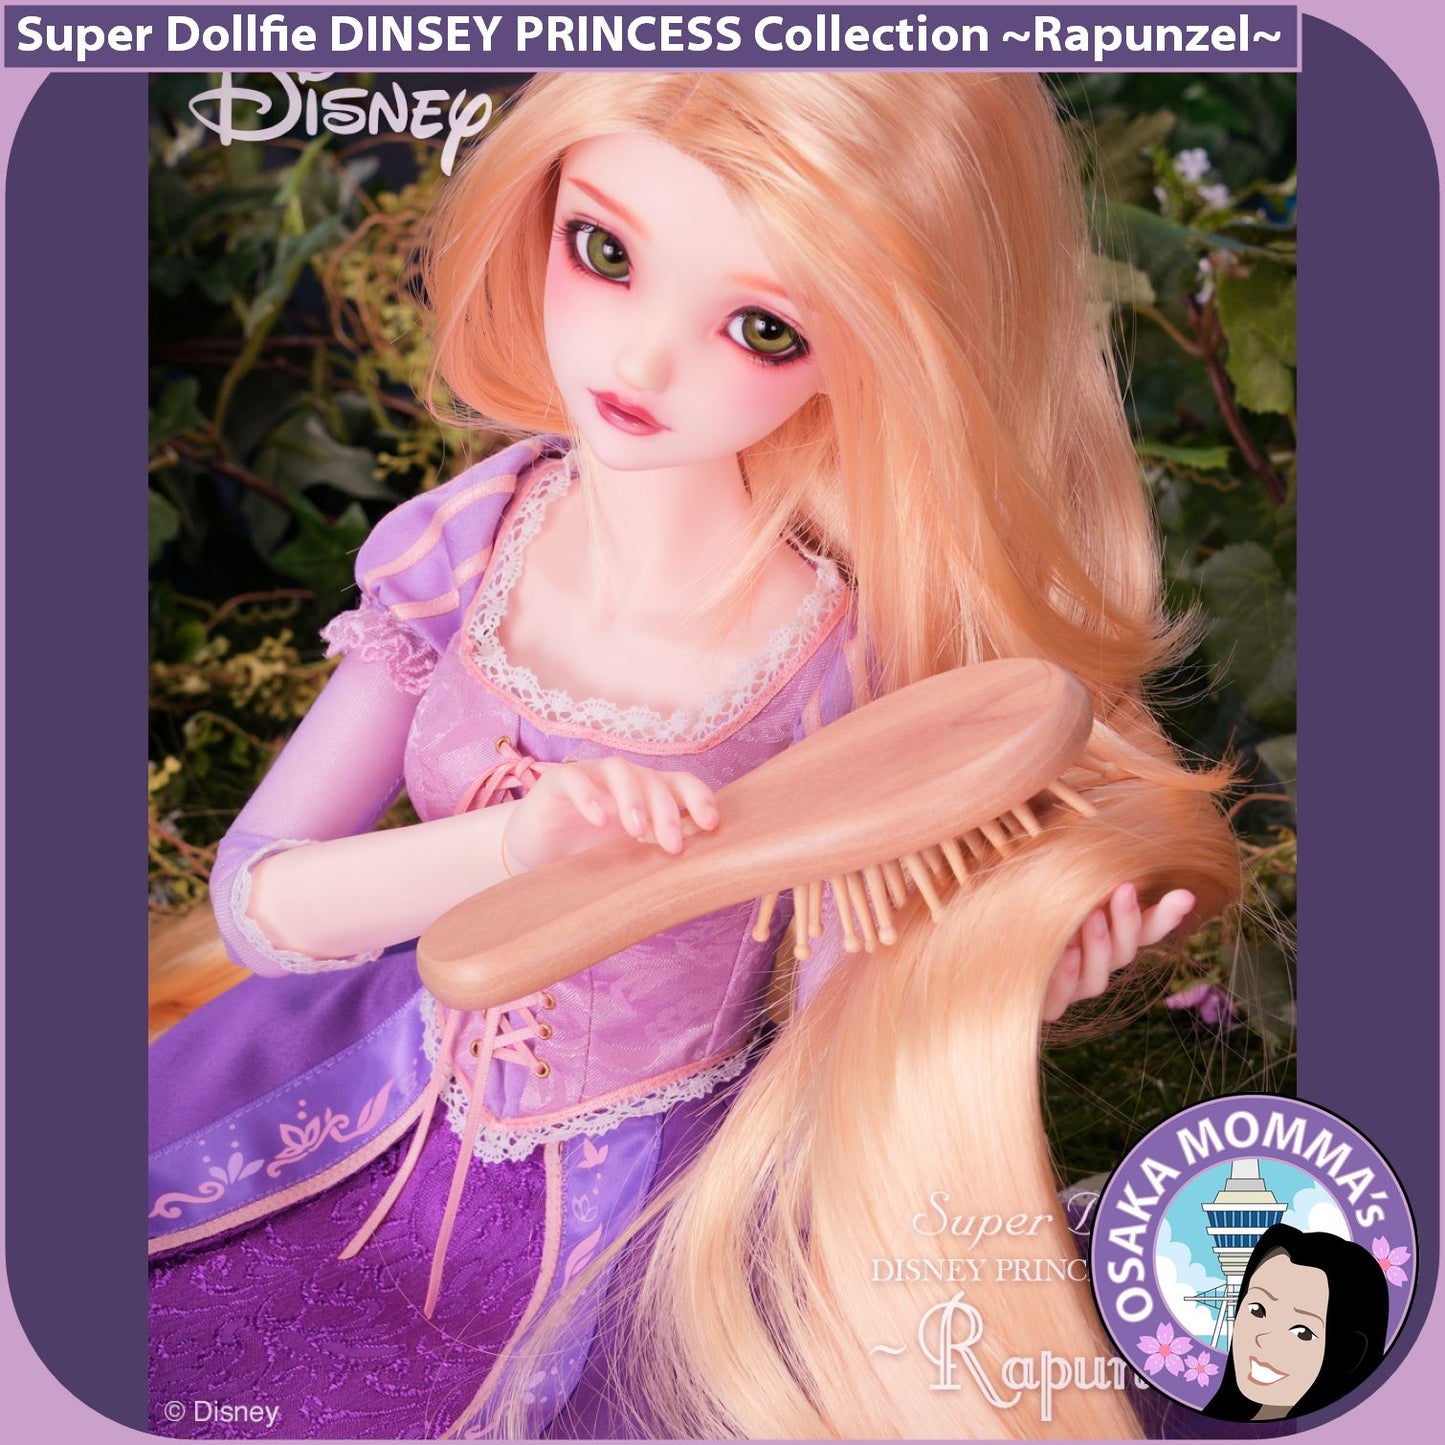 Rapunzel Disney Princess Collection Super Dollfie